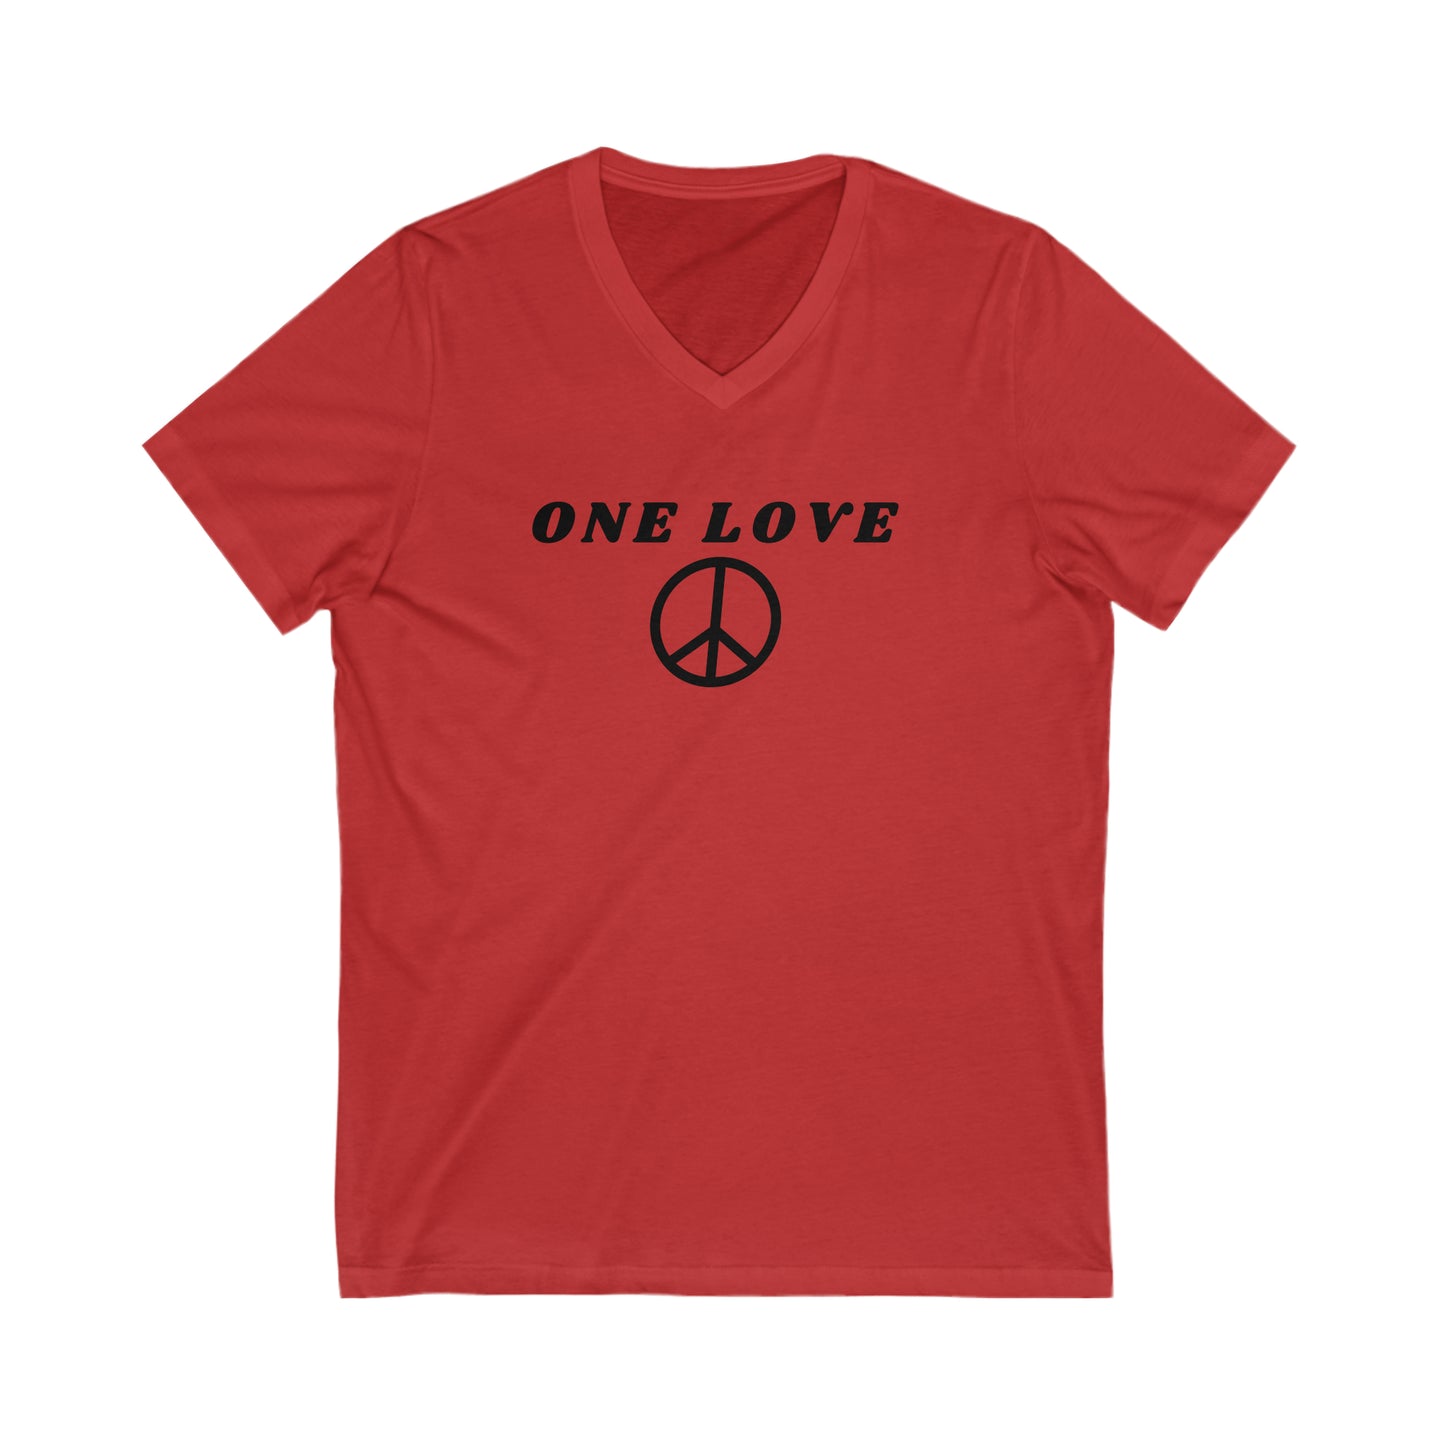 ONE LOVE PEACE STATEMENT V NECK TSHIRT